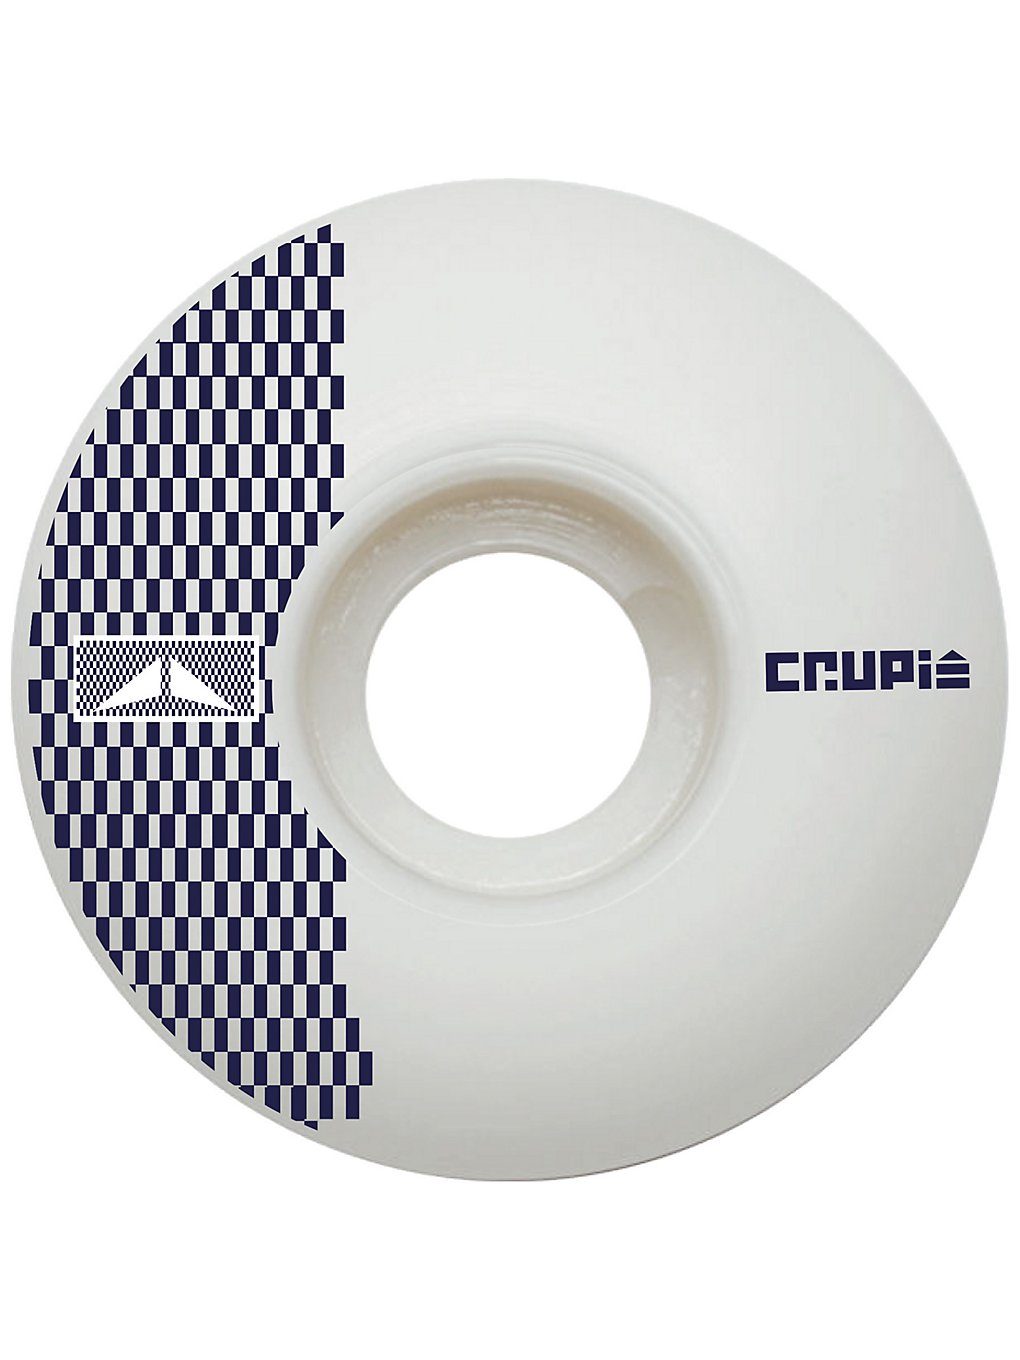 Crupie Square 54mm Wheels uni kaufen